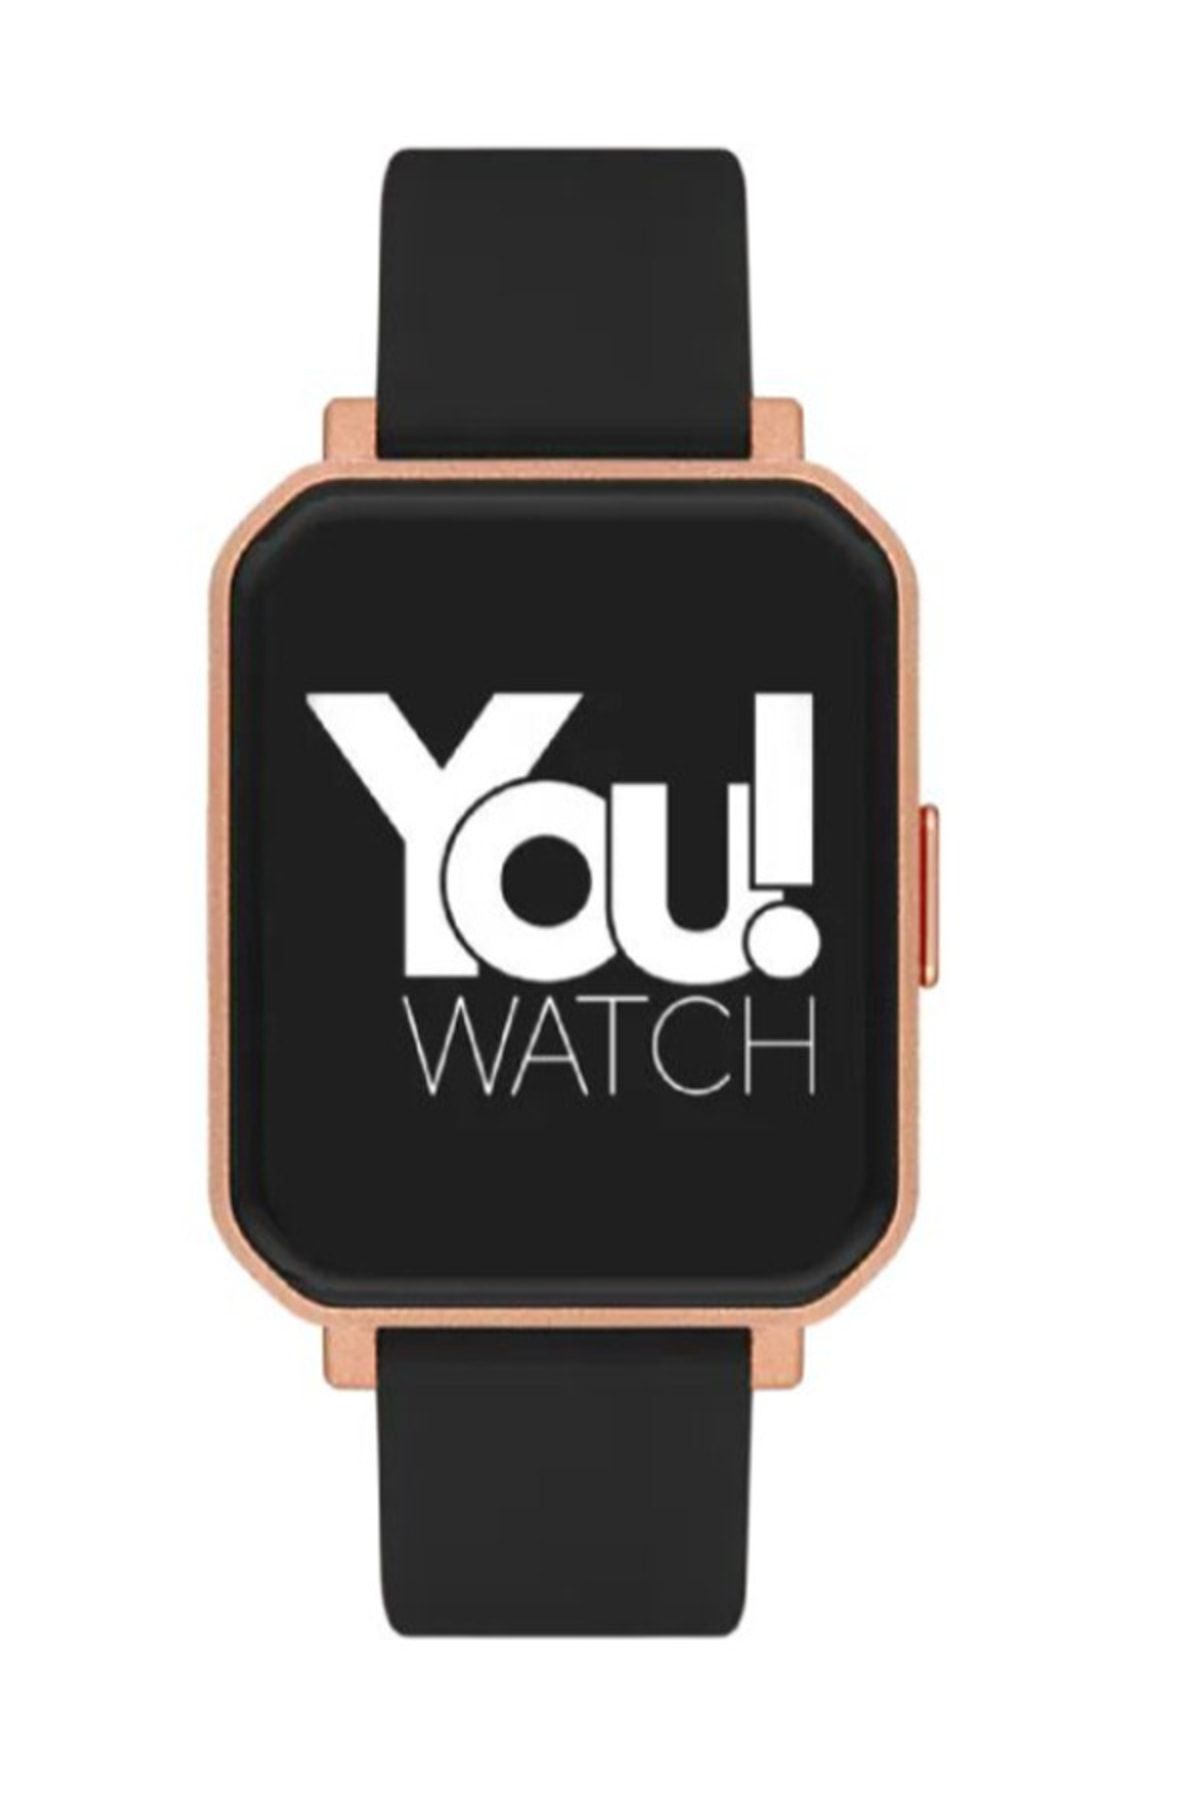 You Watch Youwatch F12-yf123 Rose Altın Renk Kasa Siyah Silikon Unisex Akıllı Kol Saati Ios & Android Uyumlu